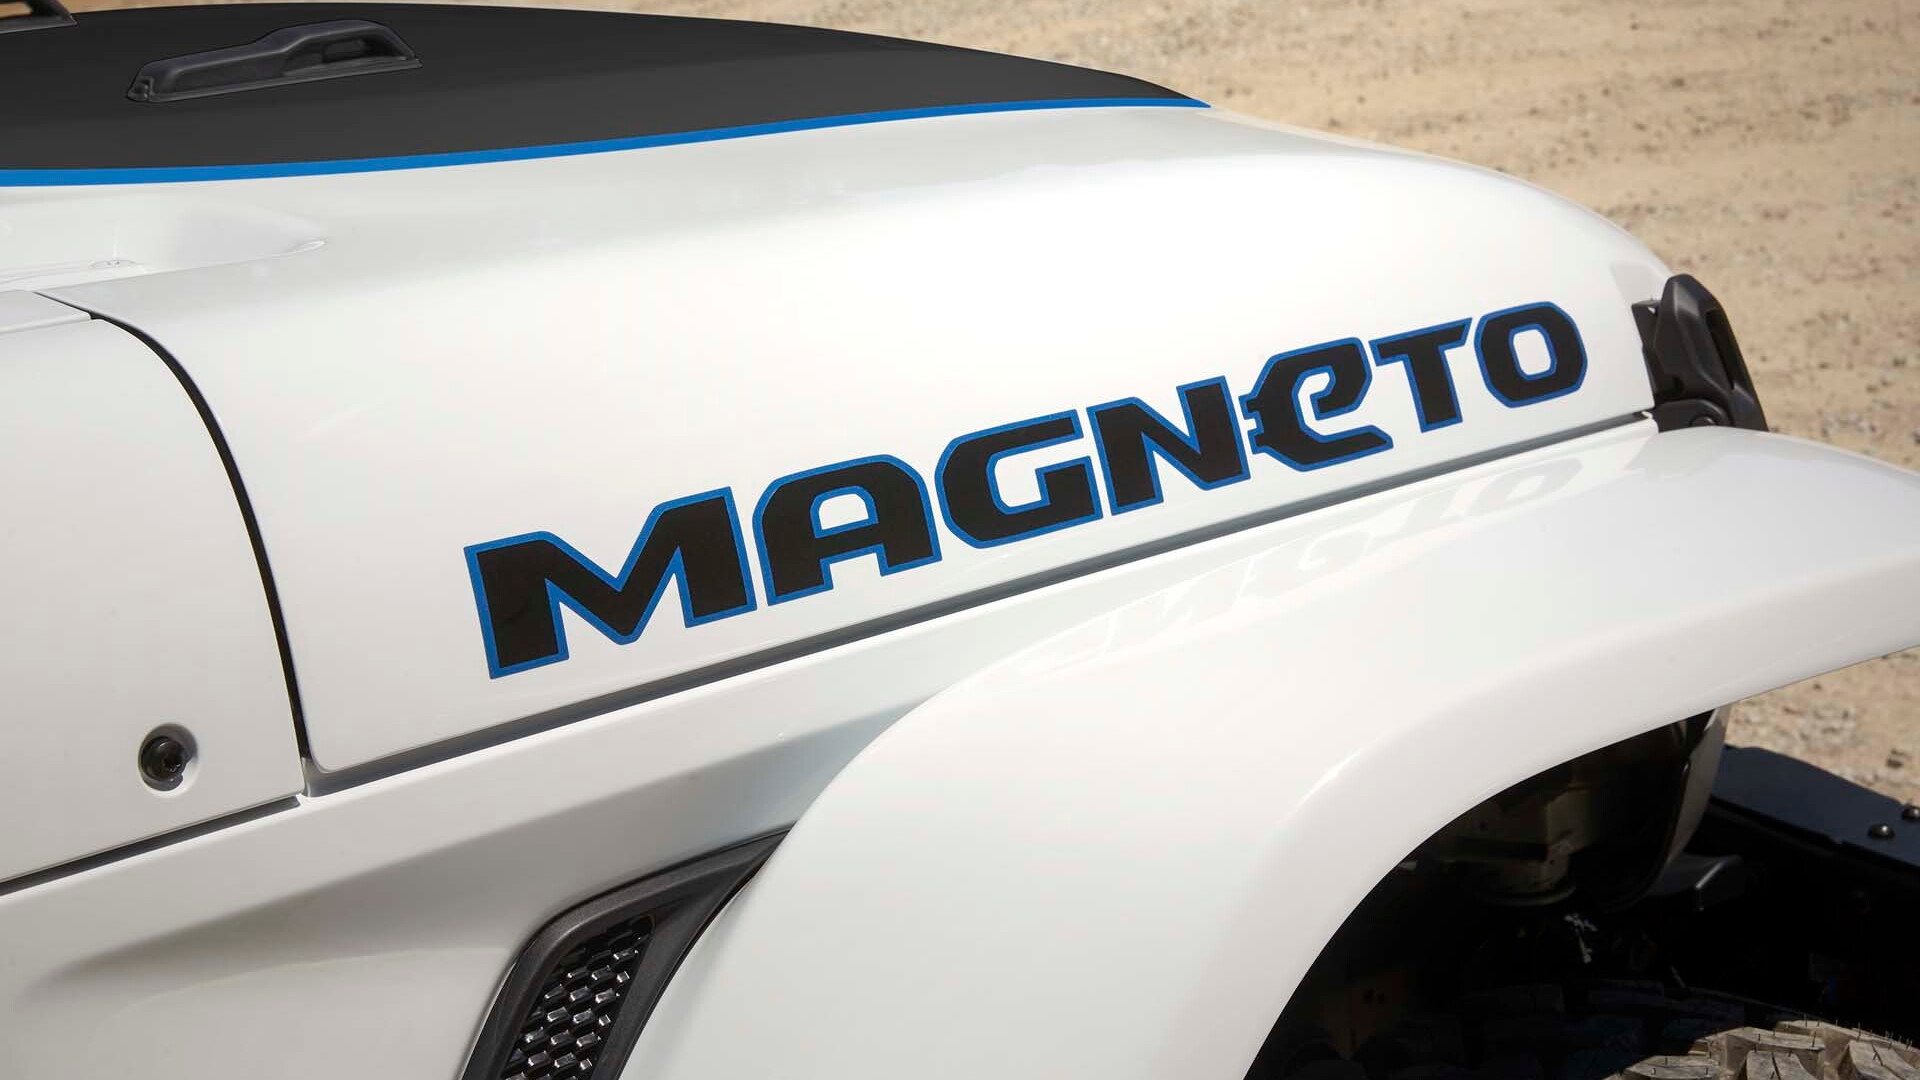 Jeep Wrangler Magneto 2.0 EV Promises Supercar Quickness